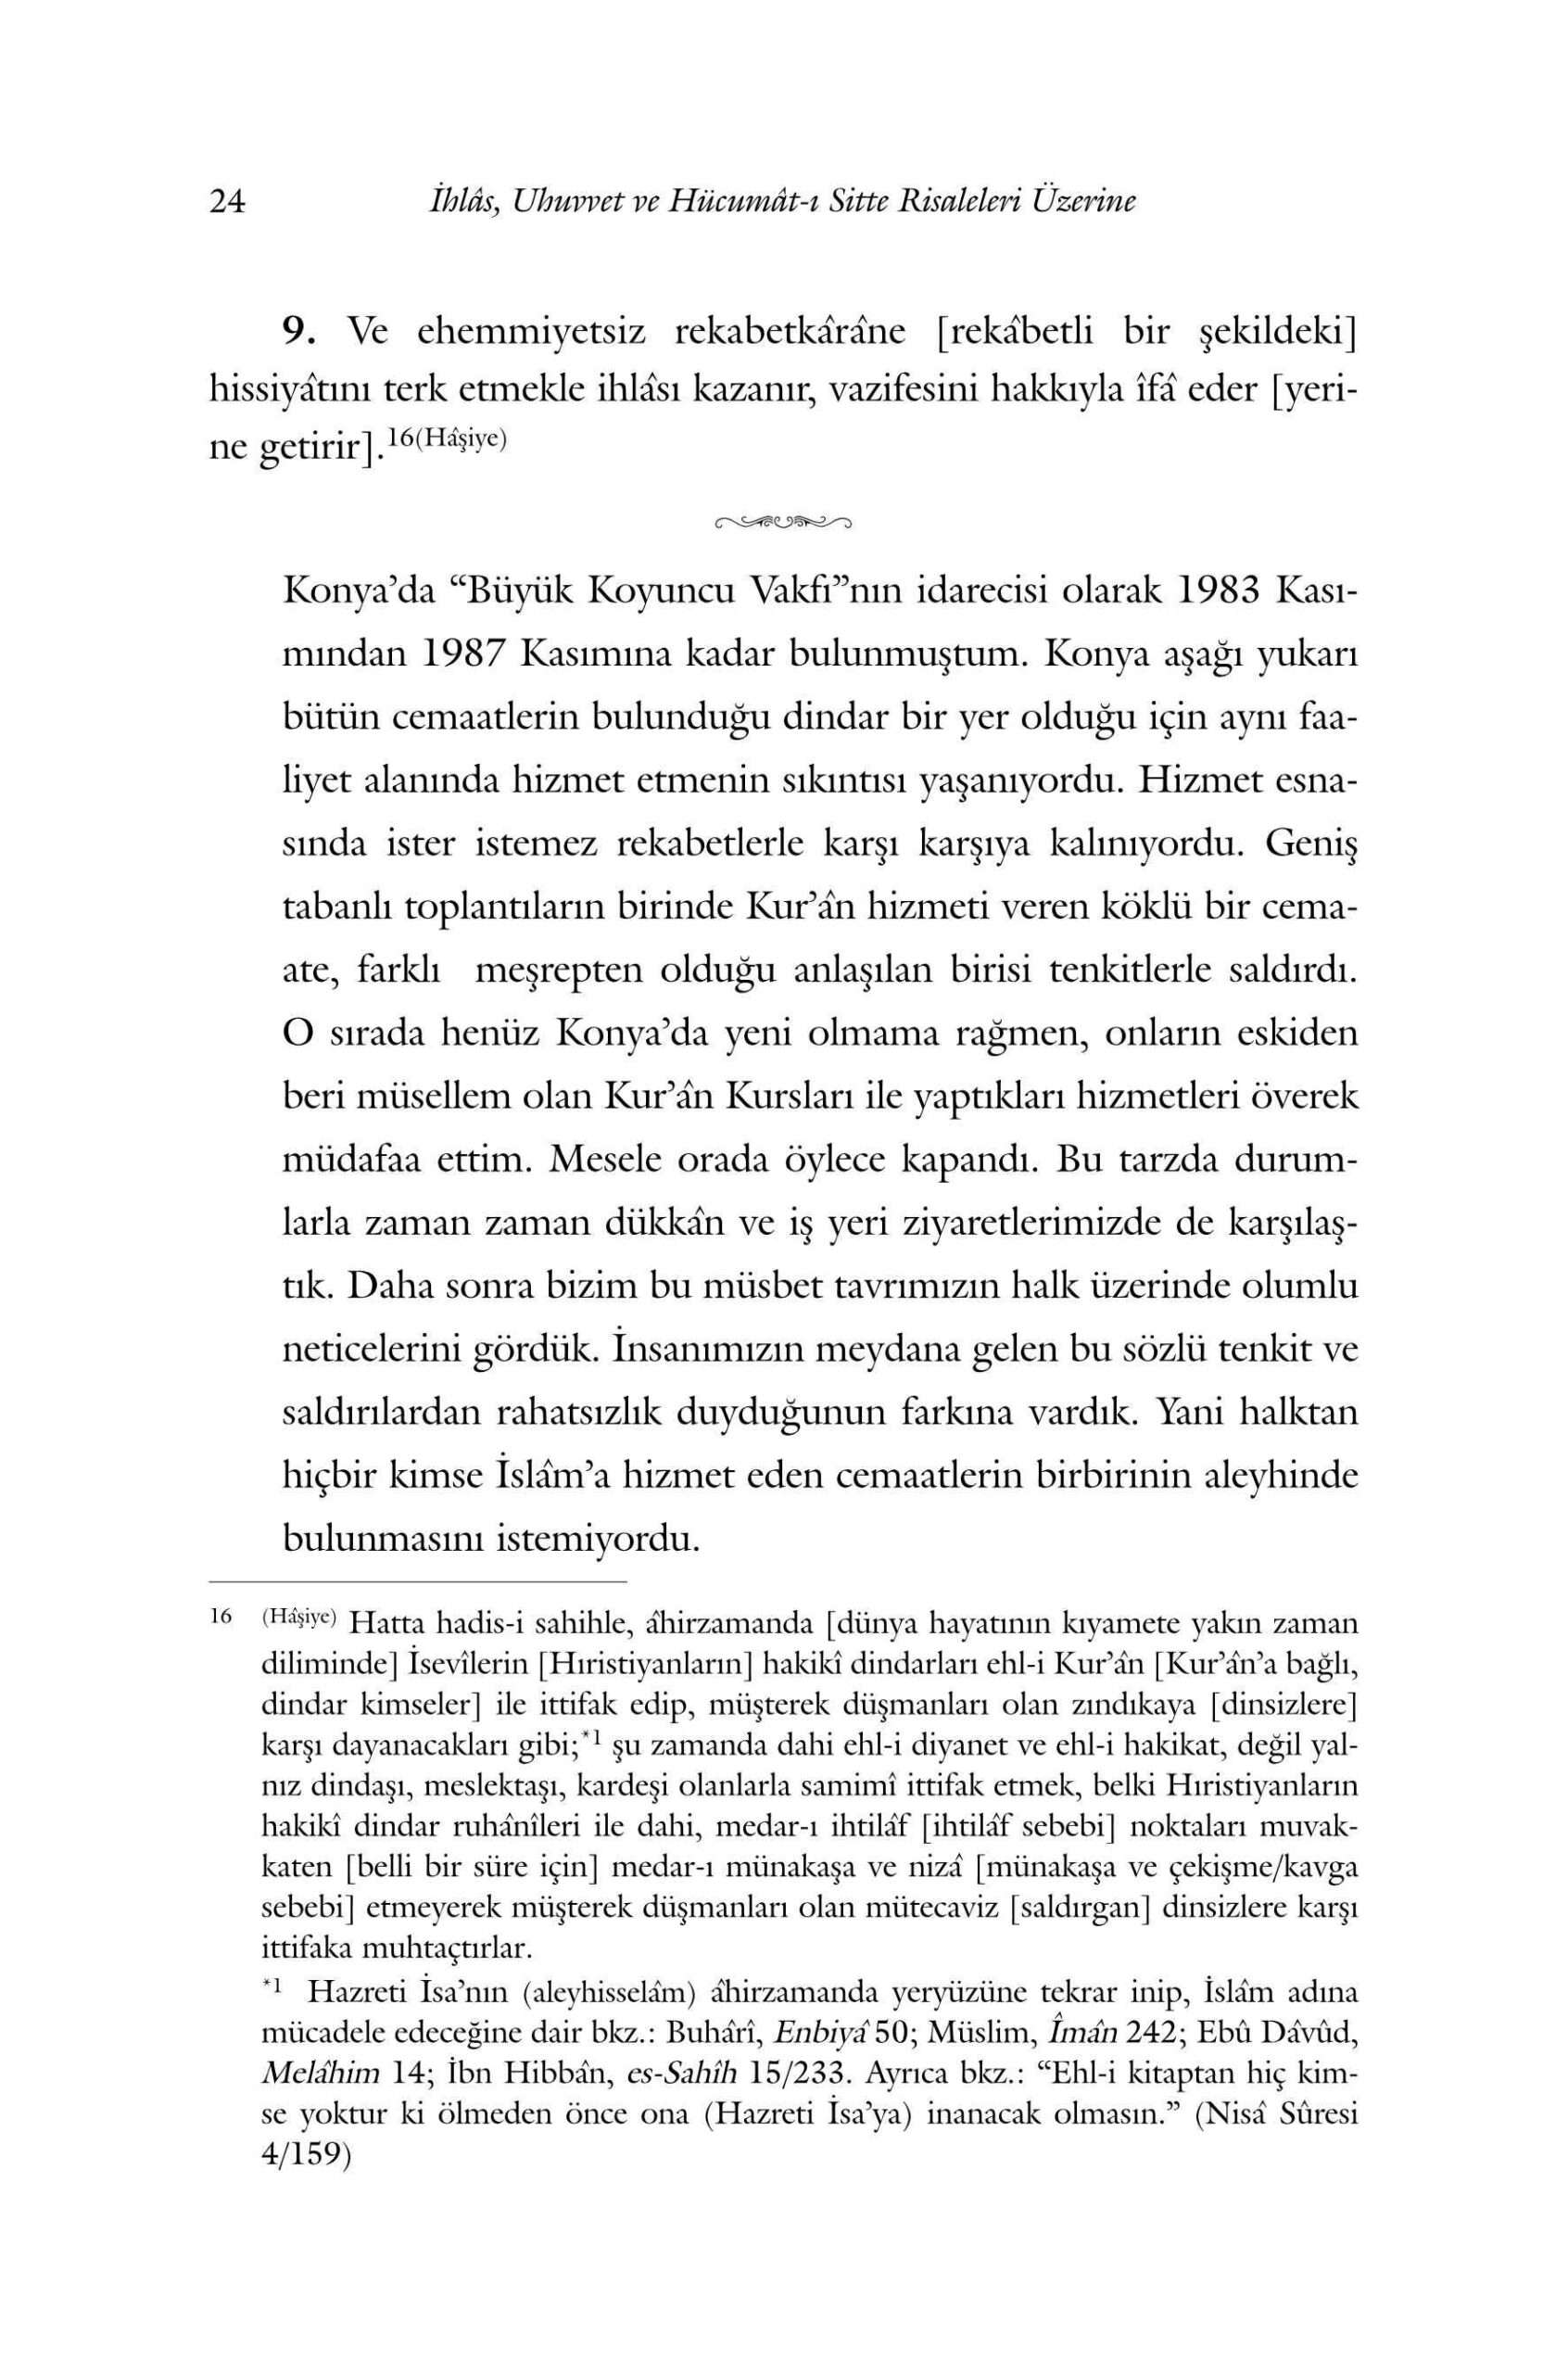 B Said Nursi - Abdullah Aymaz - Ihlas Uuhuvvet Risaleleri Uzerine - SahdamarY.pdf, 297-Sayfa 